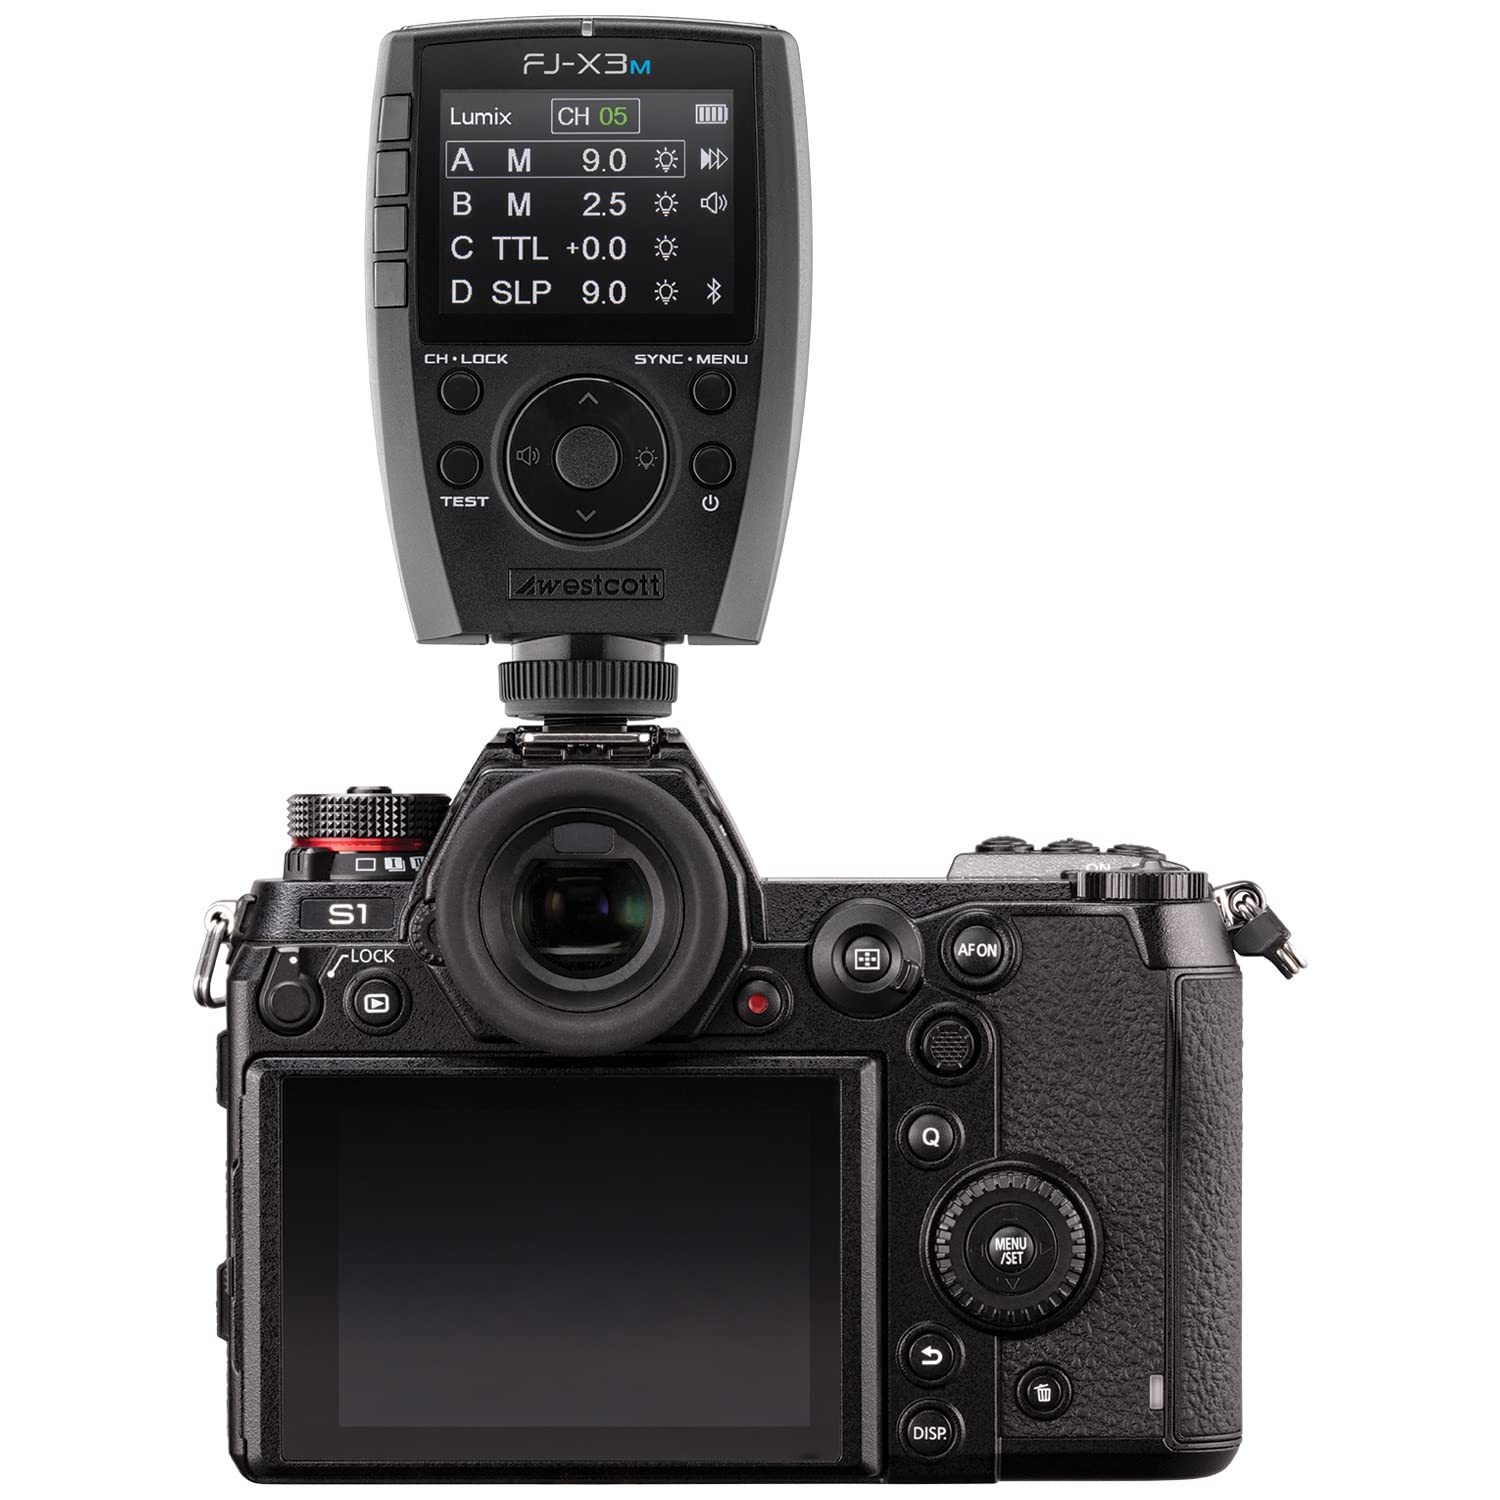 Westcott FJ-X3 M Universal Wireless Flash Trigger with Multi-Brand Camera Mount (Compatible with Canon, Sony, Nikon, Fuji, Panasonic, & Olympus Cameras)